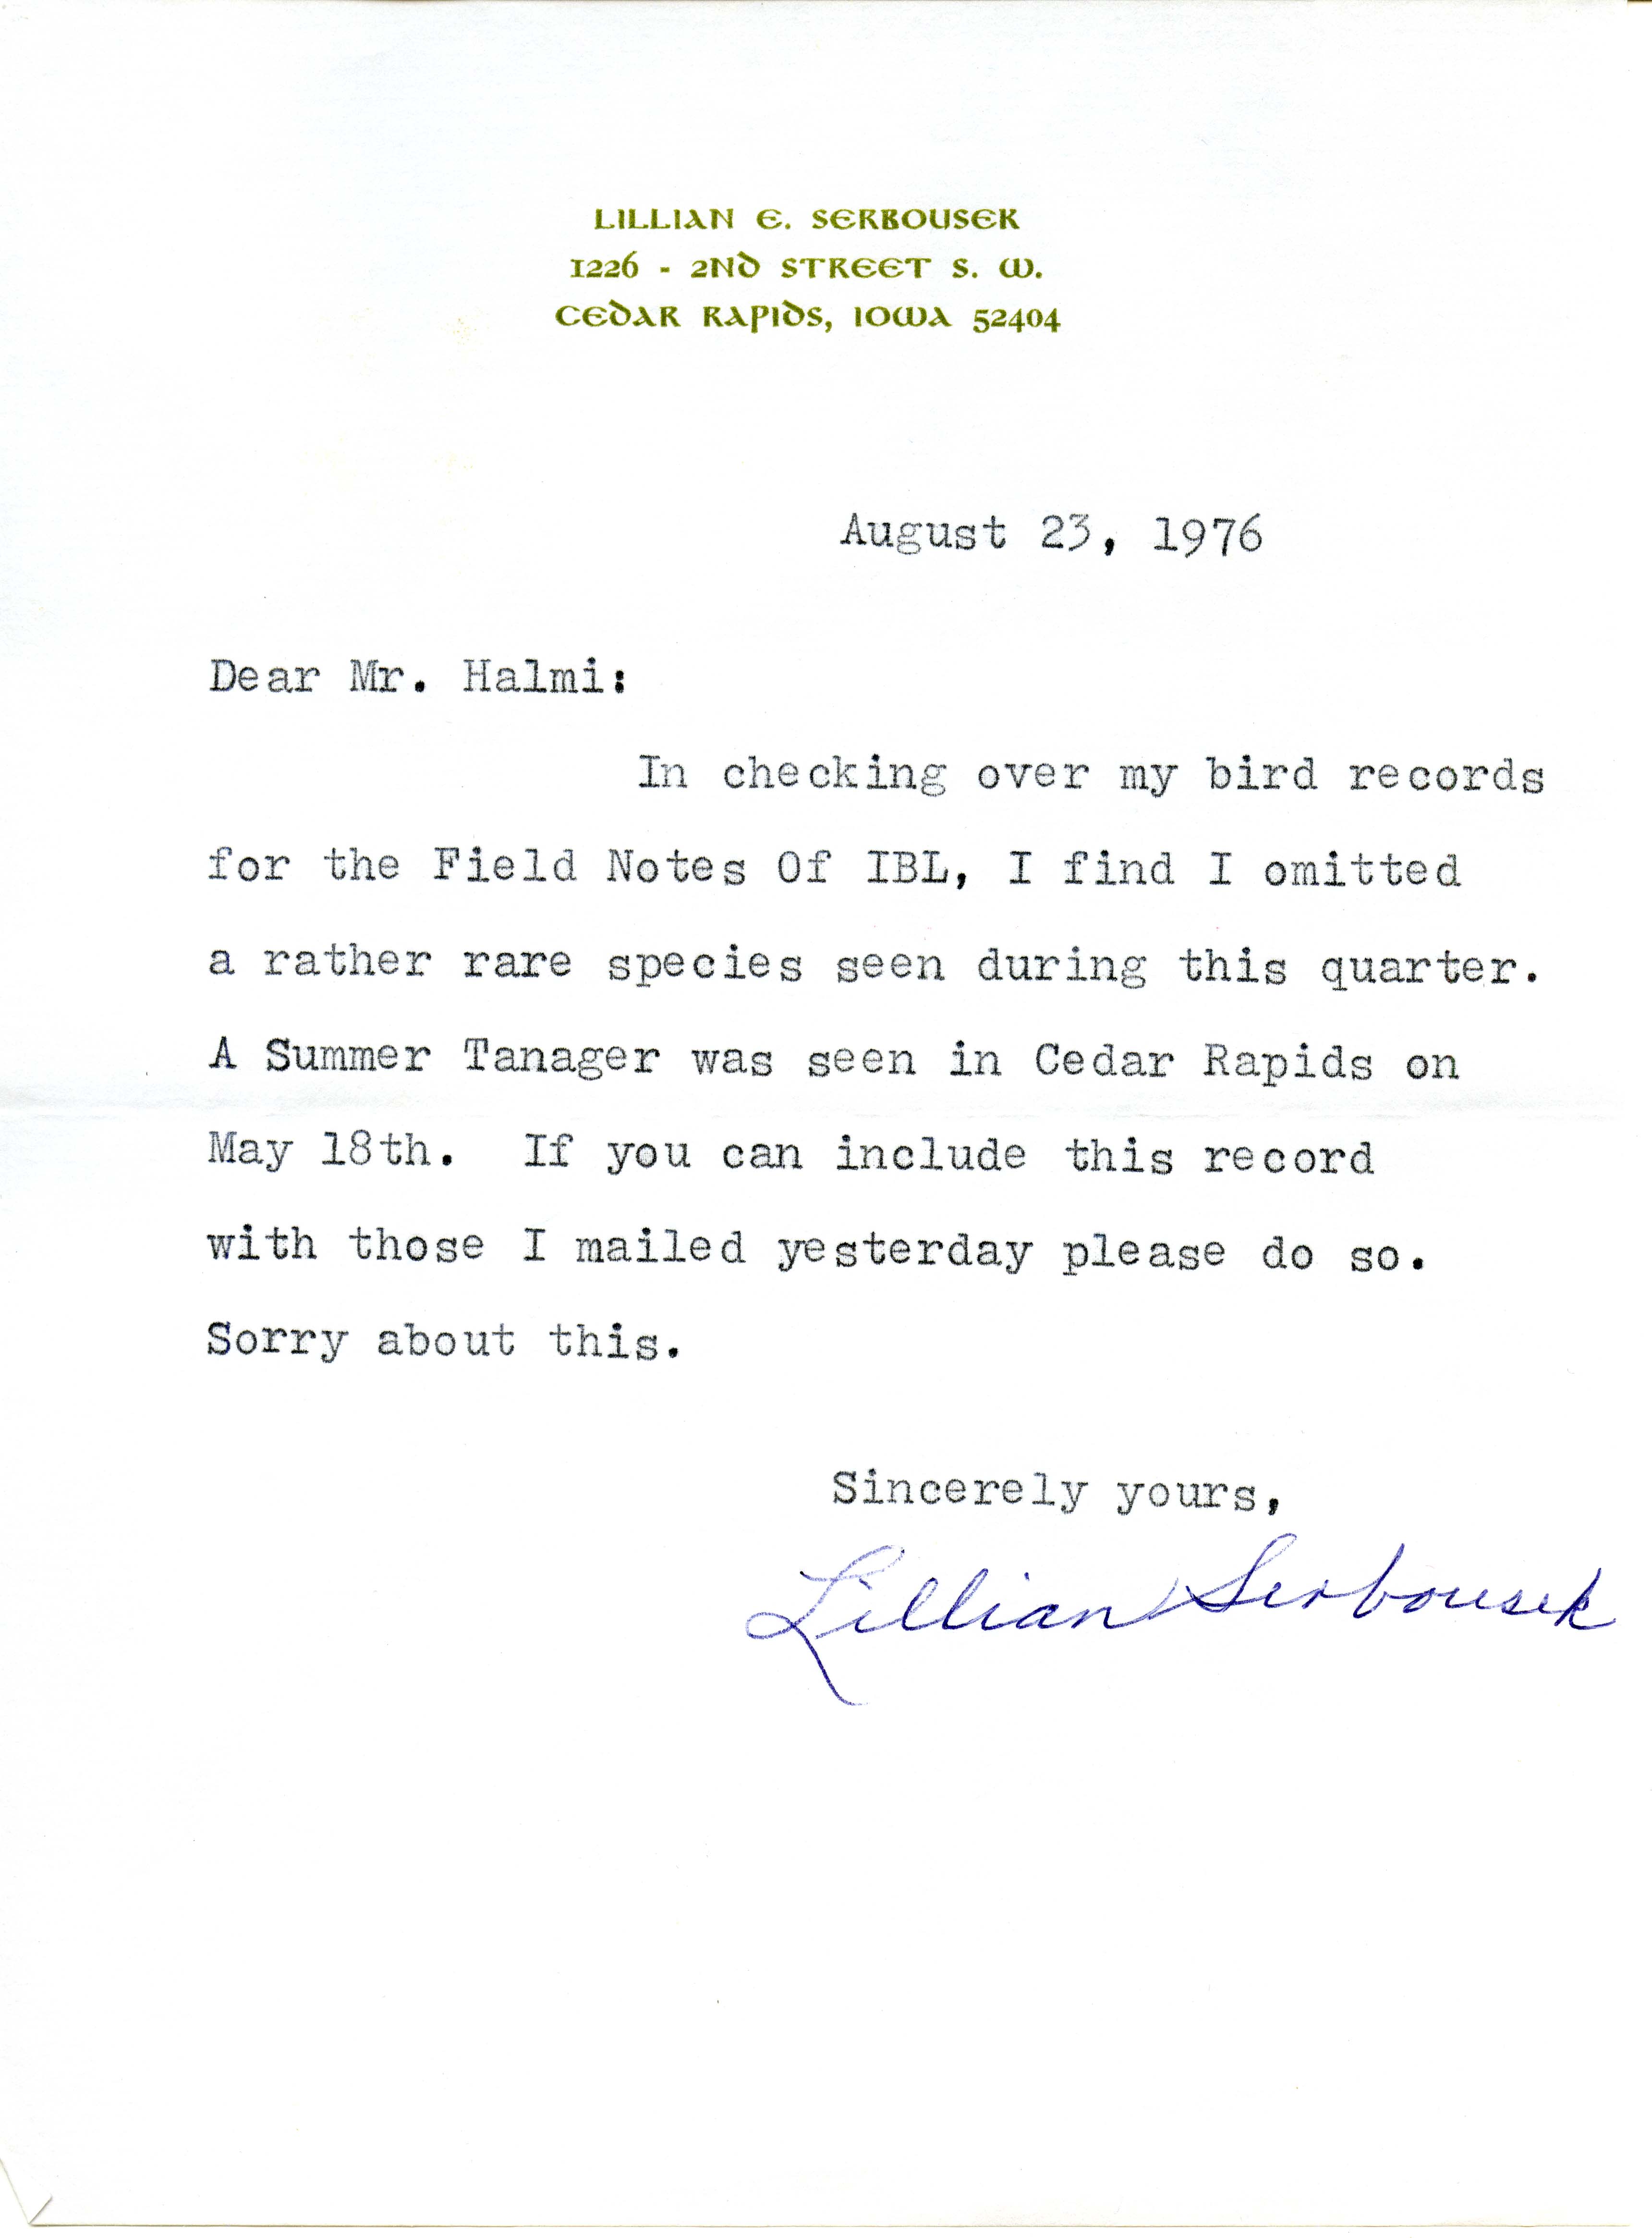 Letter from Lillian E. Serbousek to Nicholas Halmi regarding a rare bird sighting in Cedar Rapids , August 23, 1976